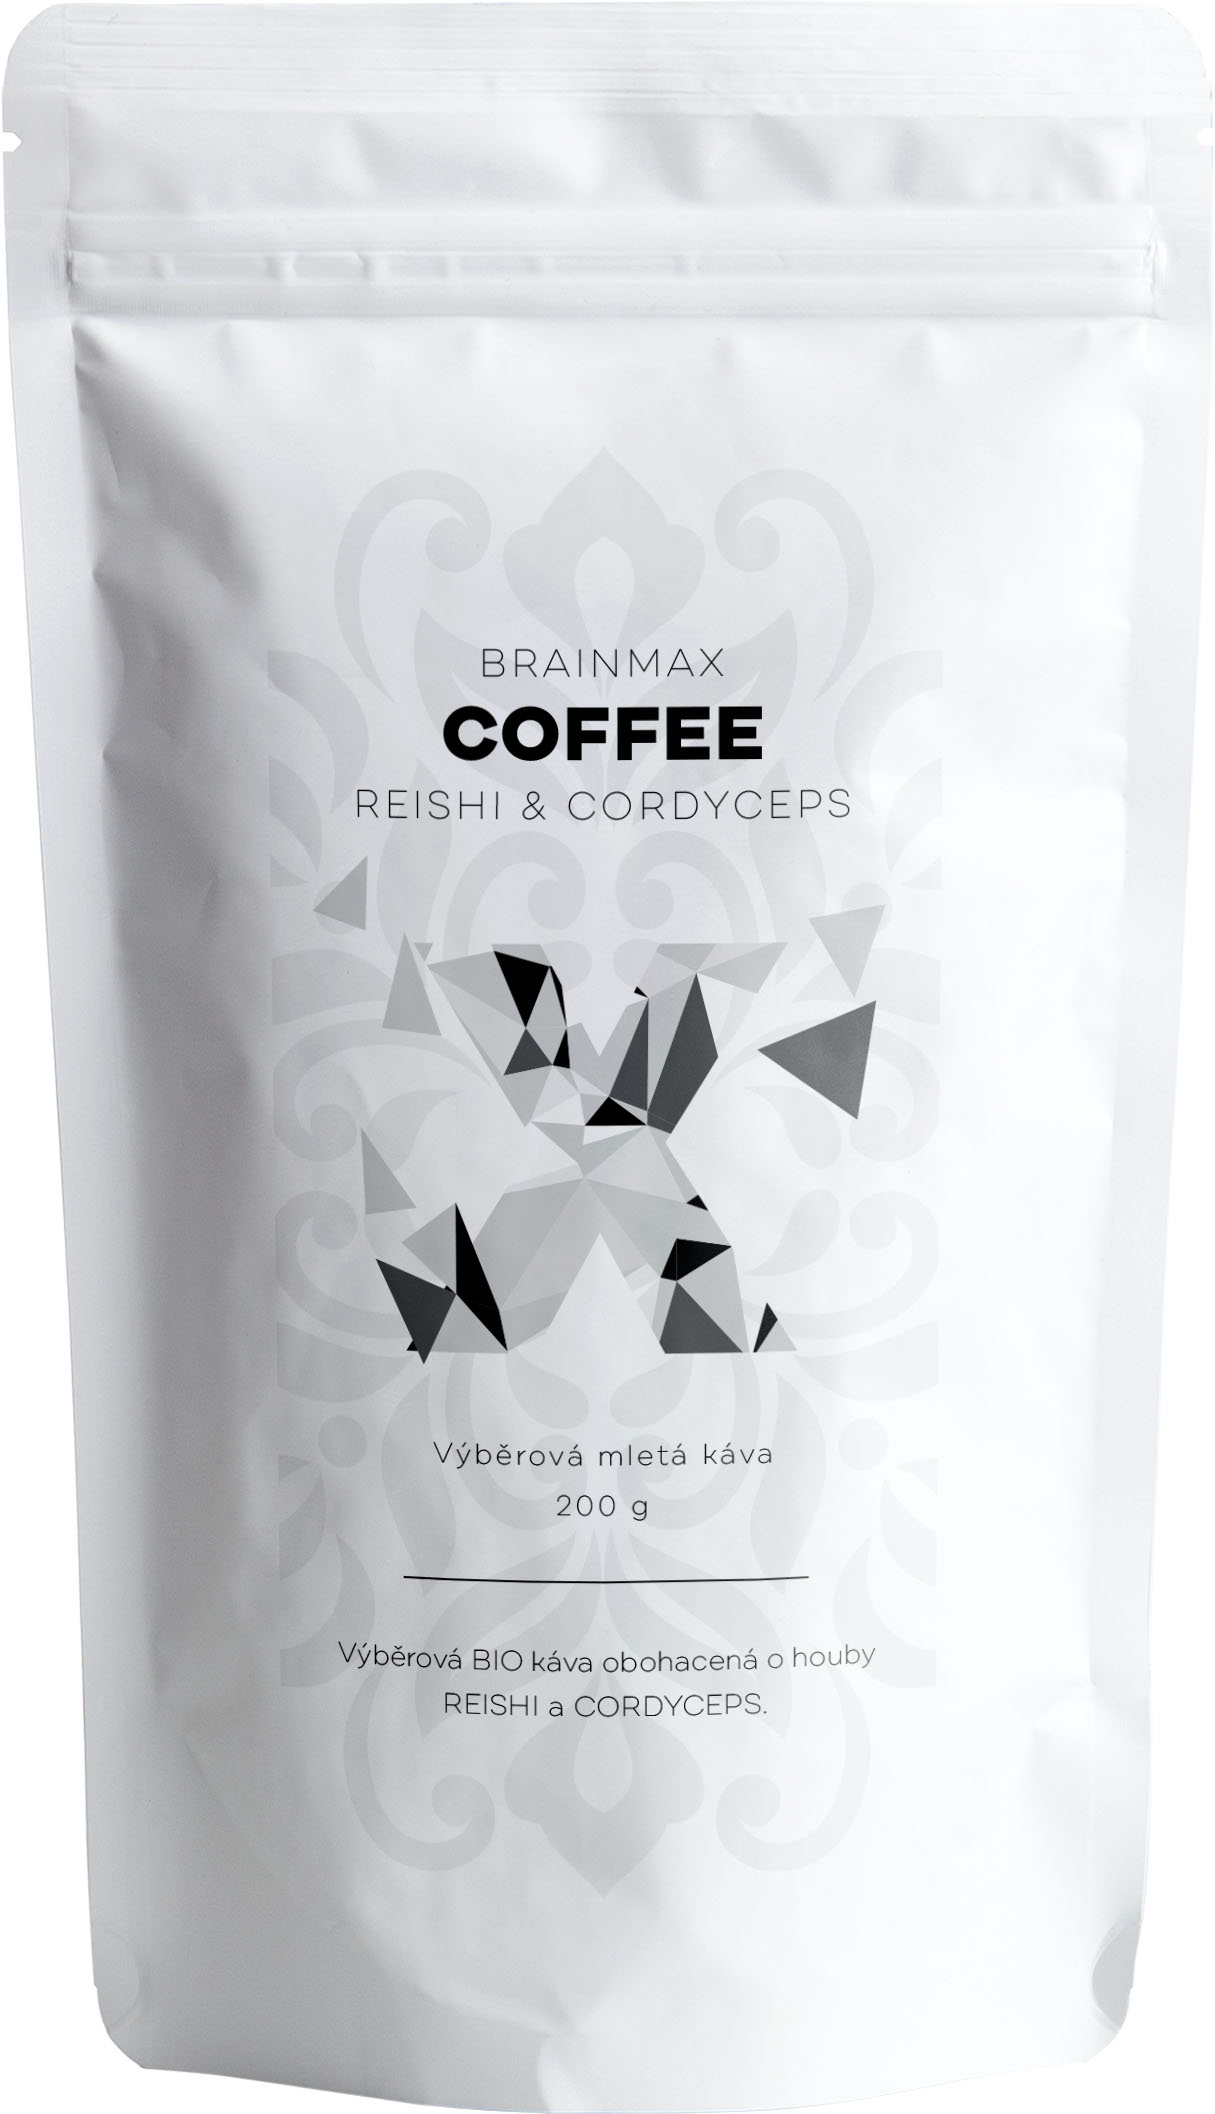 Levně BrainMax Coffee Reishi & Cordyceps, káva s vitálními houbami, BIO, 200g *CZ-BIO-001 certifikát